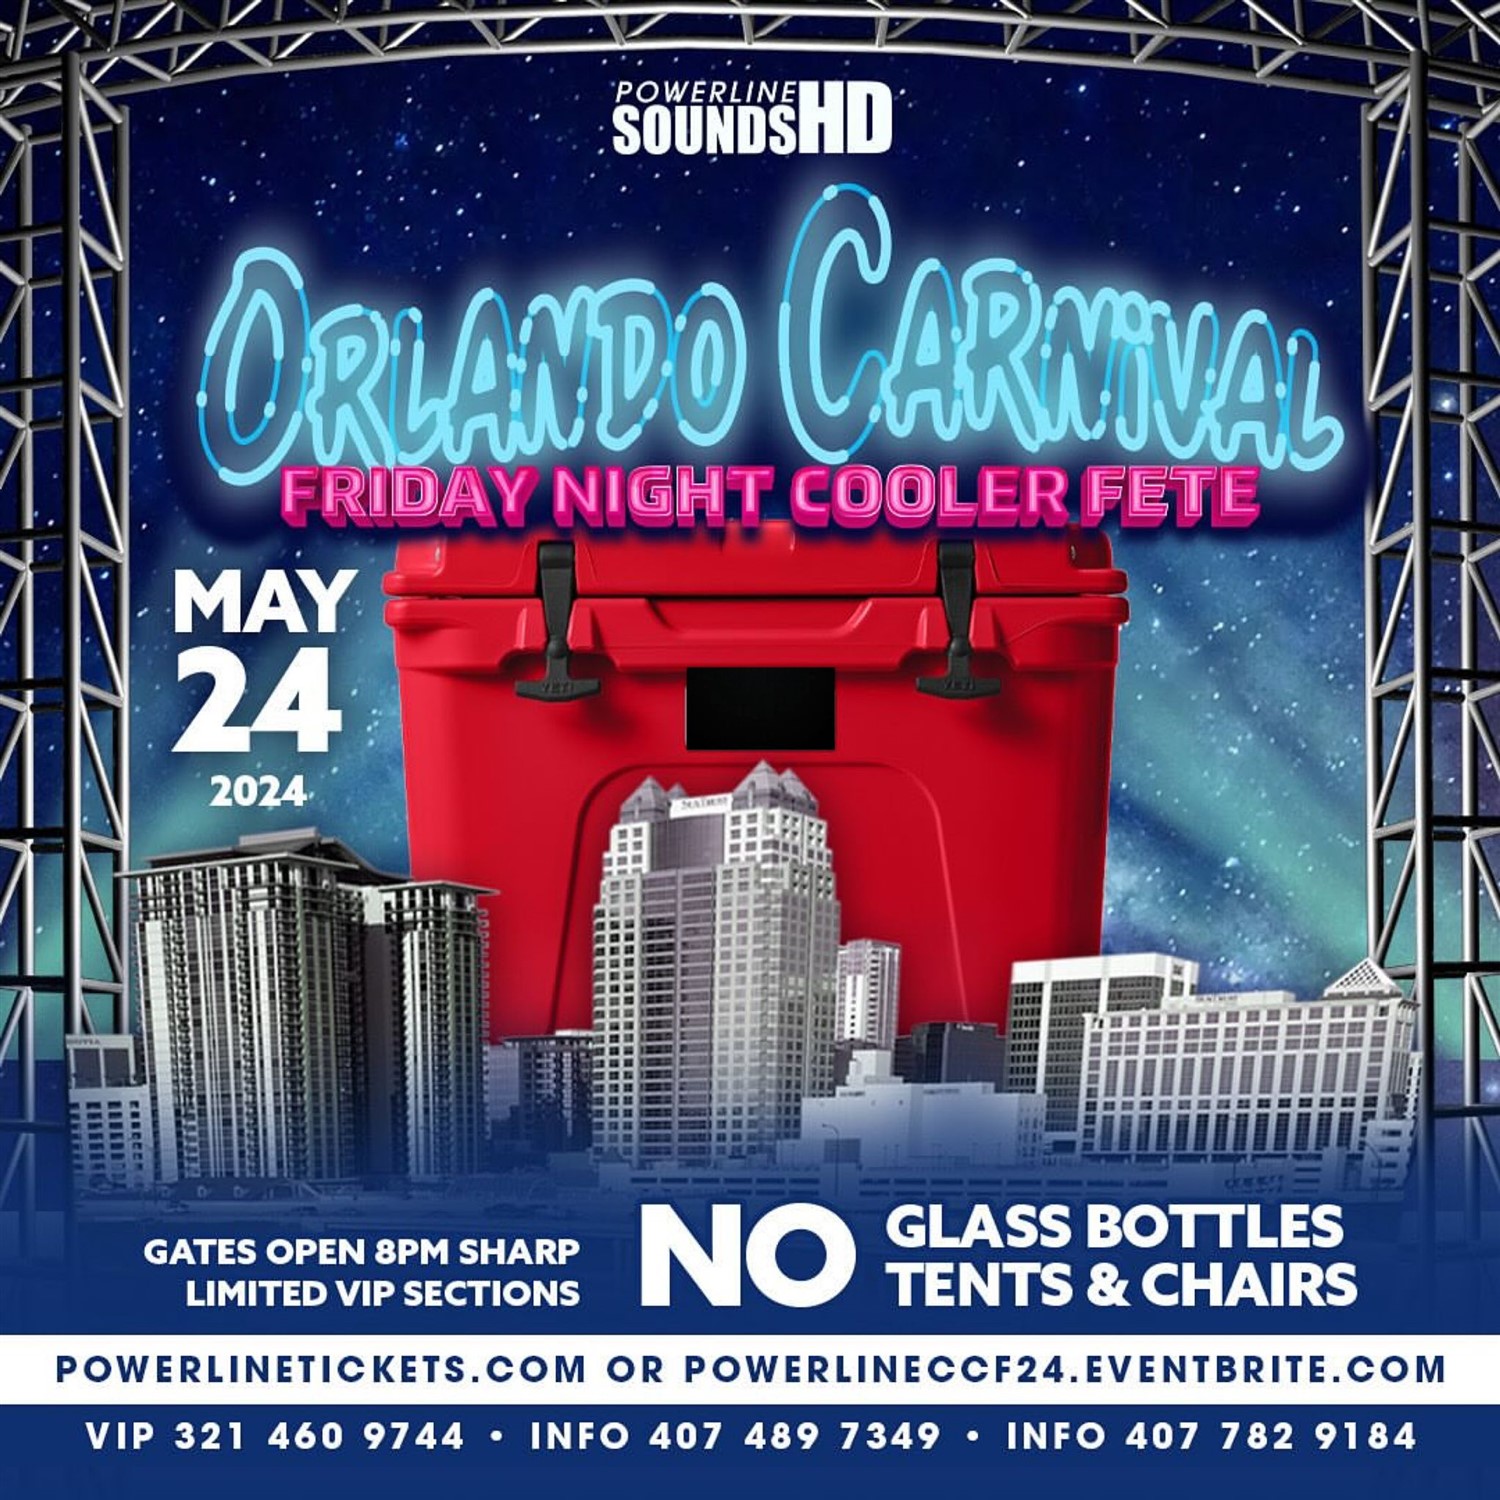 POWERLINE'S 2024 Annual      Orlando Carnival Cooler Fete!! NO GLASS BOTTLES / Gates open @ 8pm / Fete starts @ 9pm on may. 24, 20:00@TBA - Compra entradas y obtén información enPowerline Sounds HD powerlinetickets.com